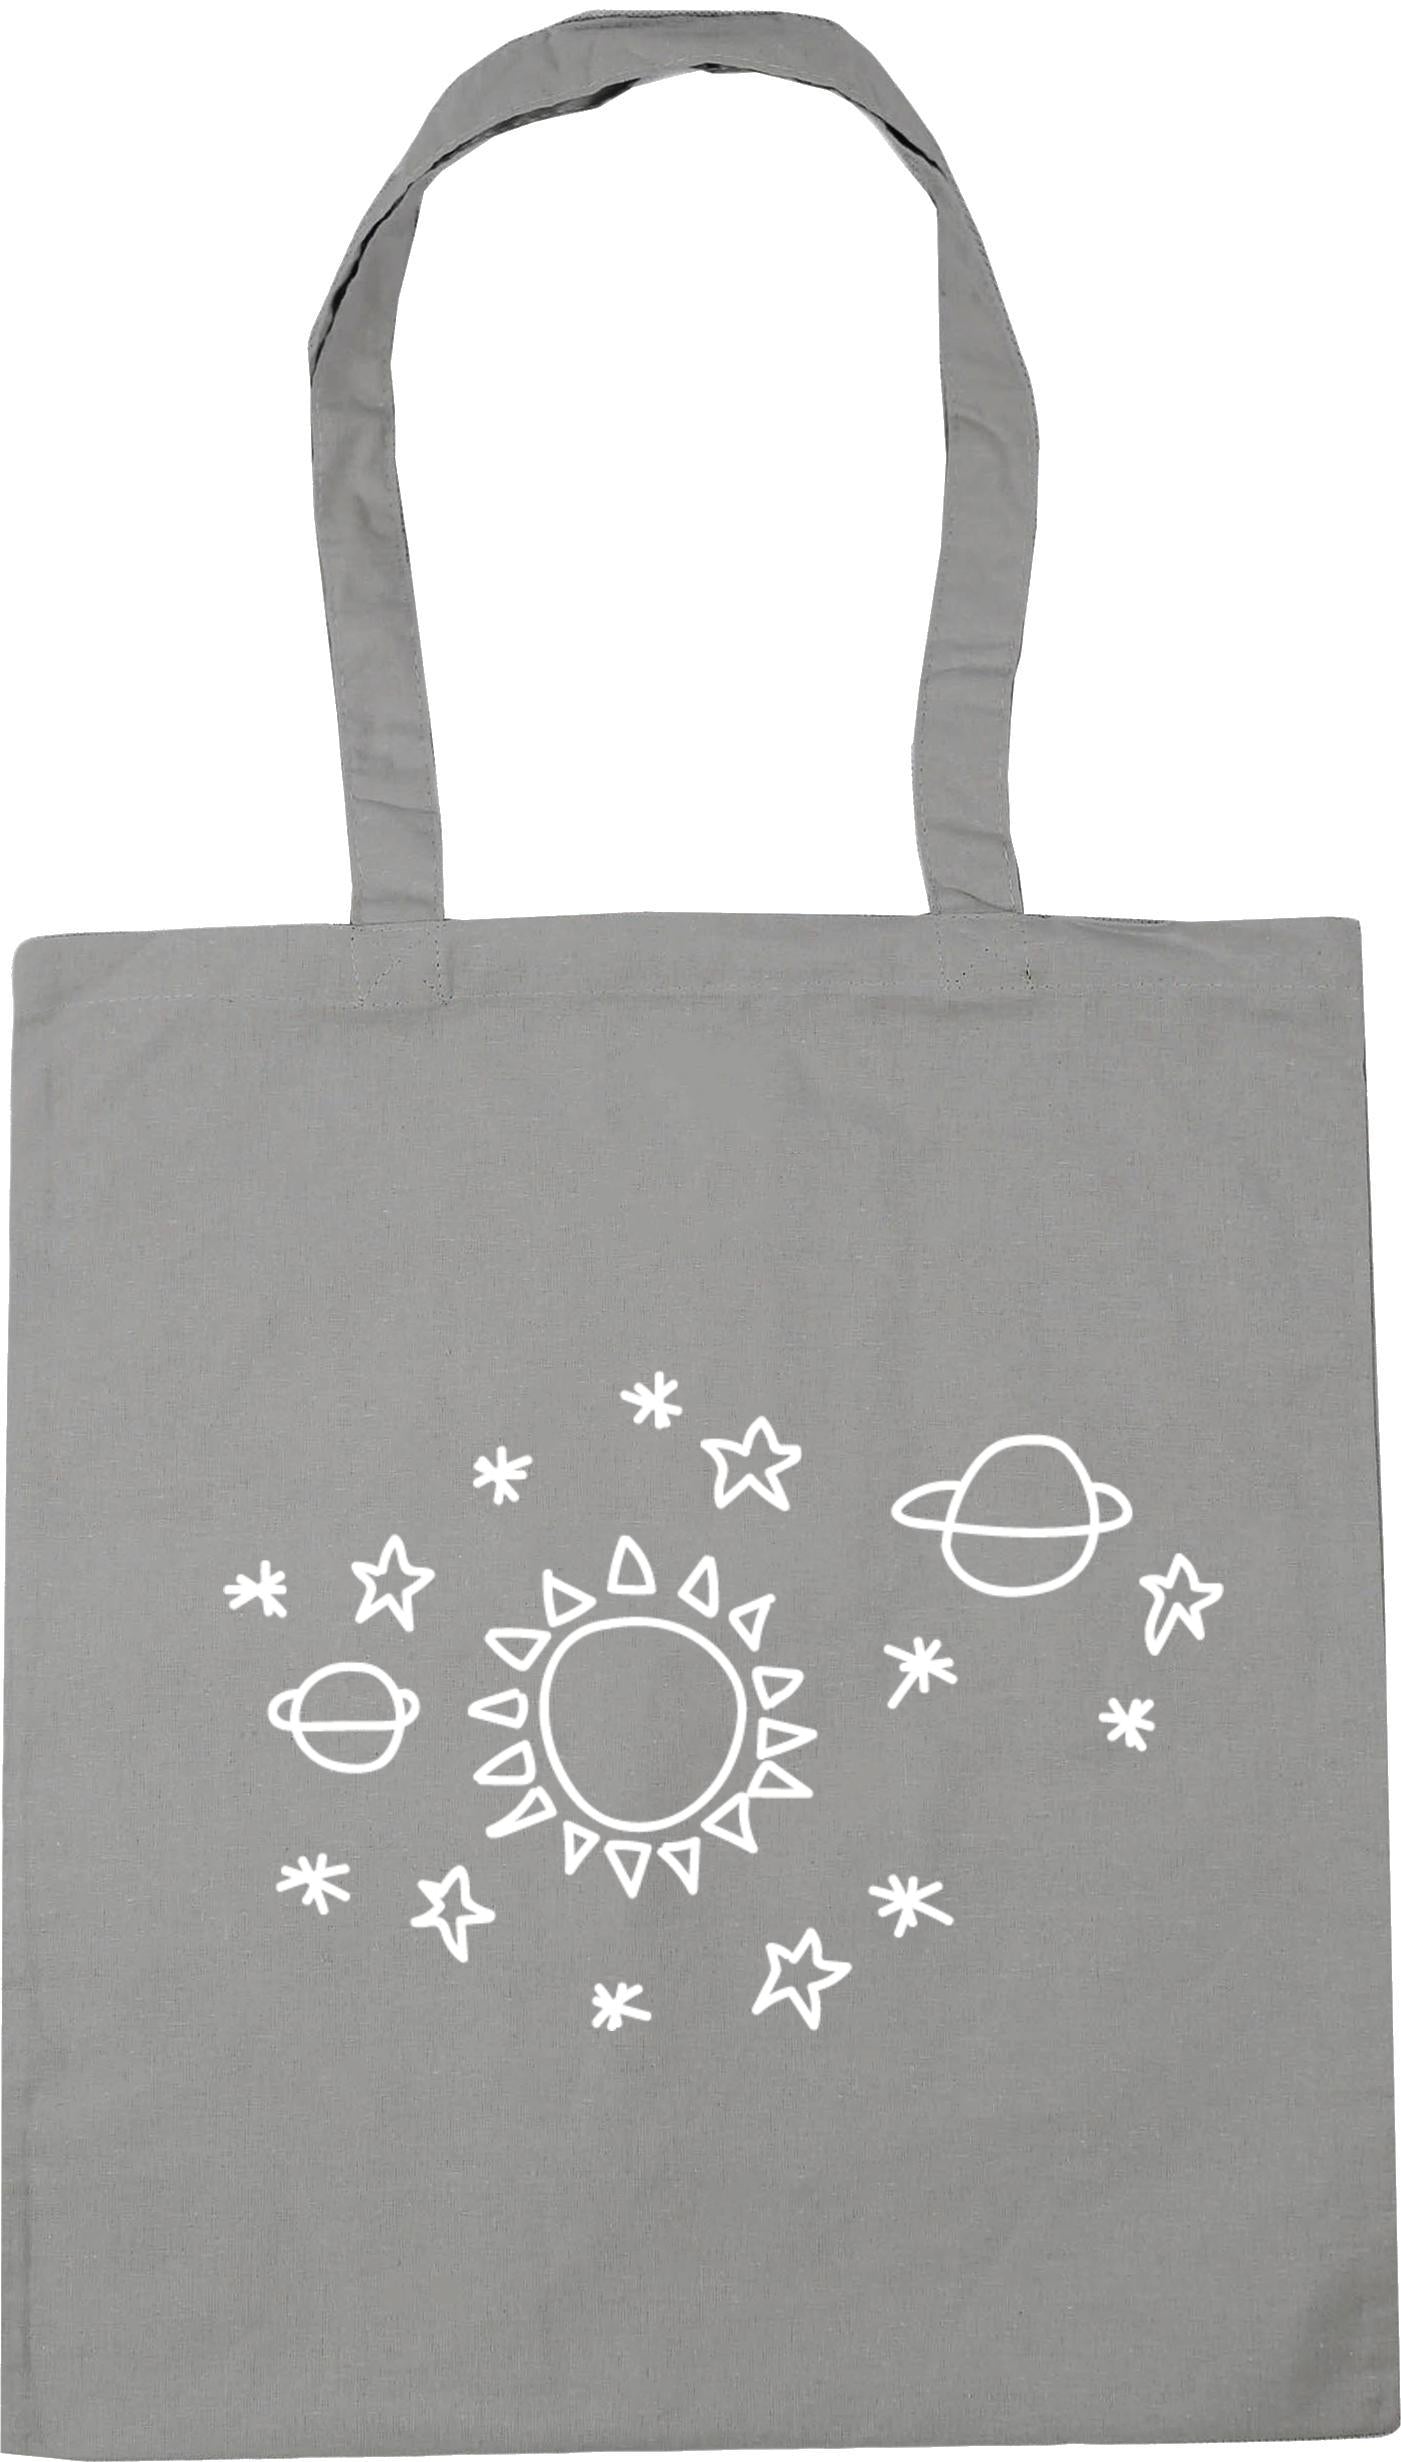 Sun star space pattern Tote Bag